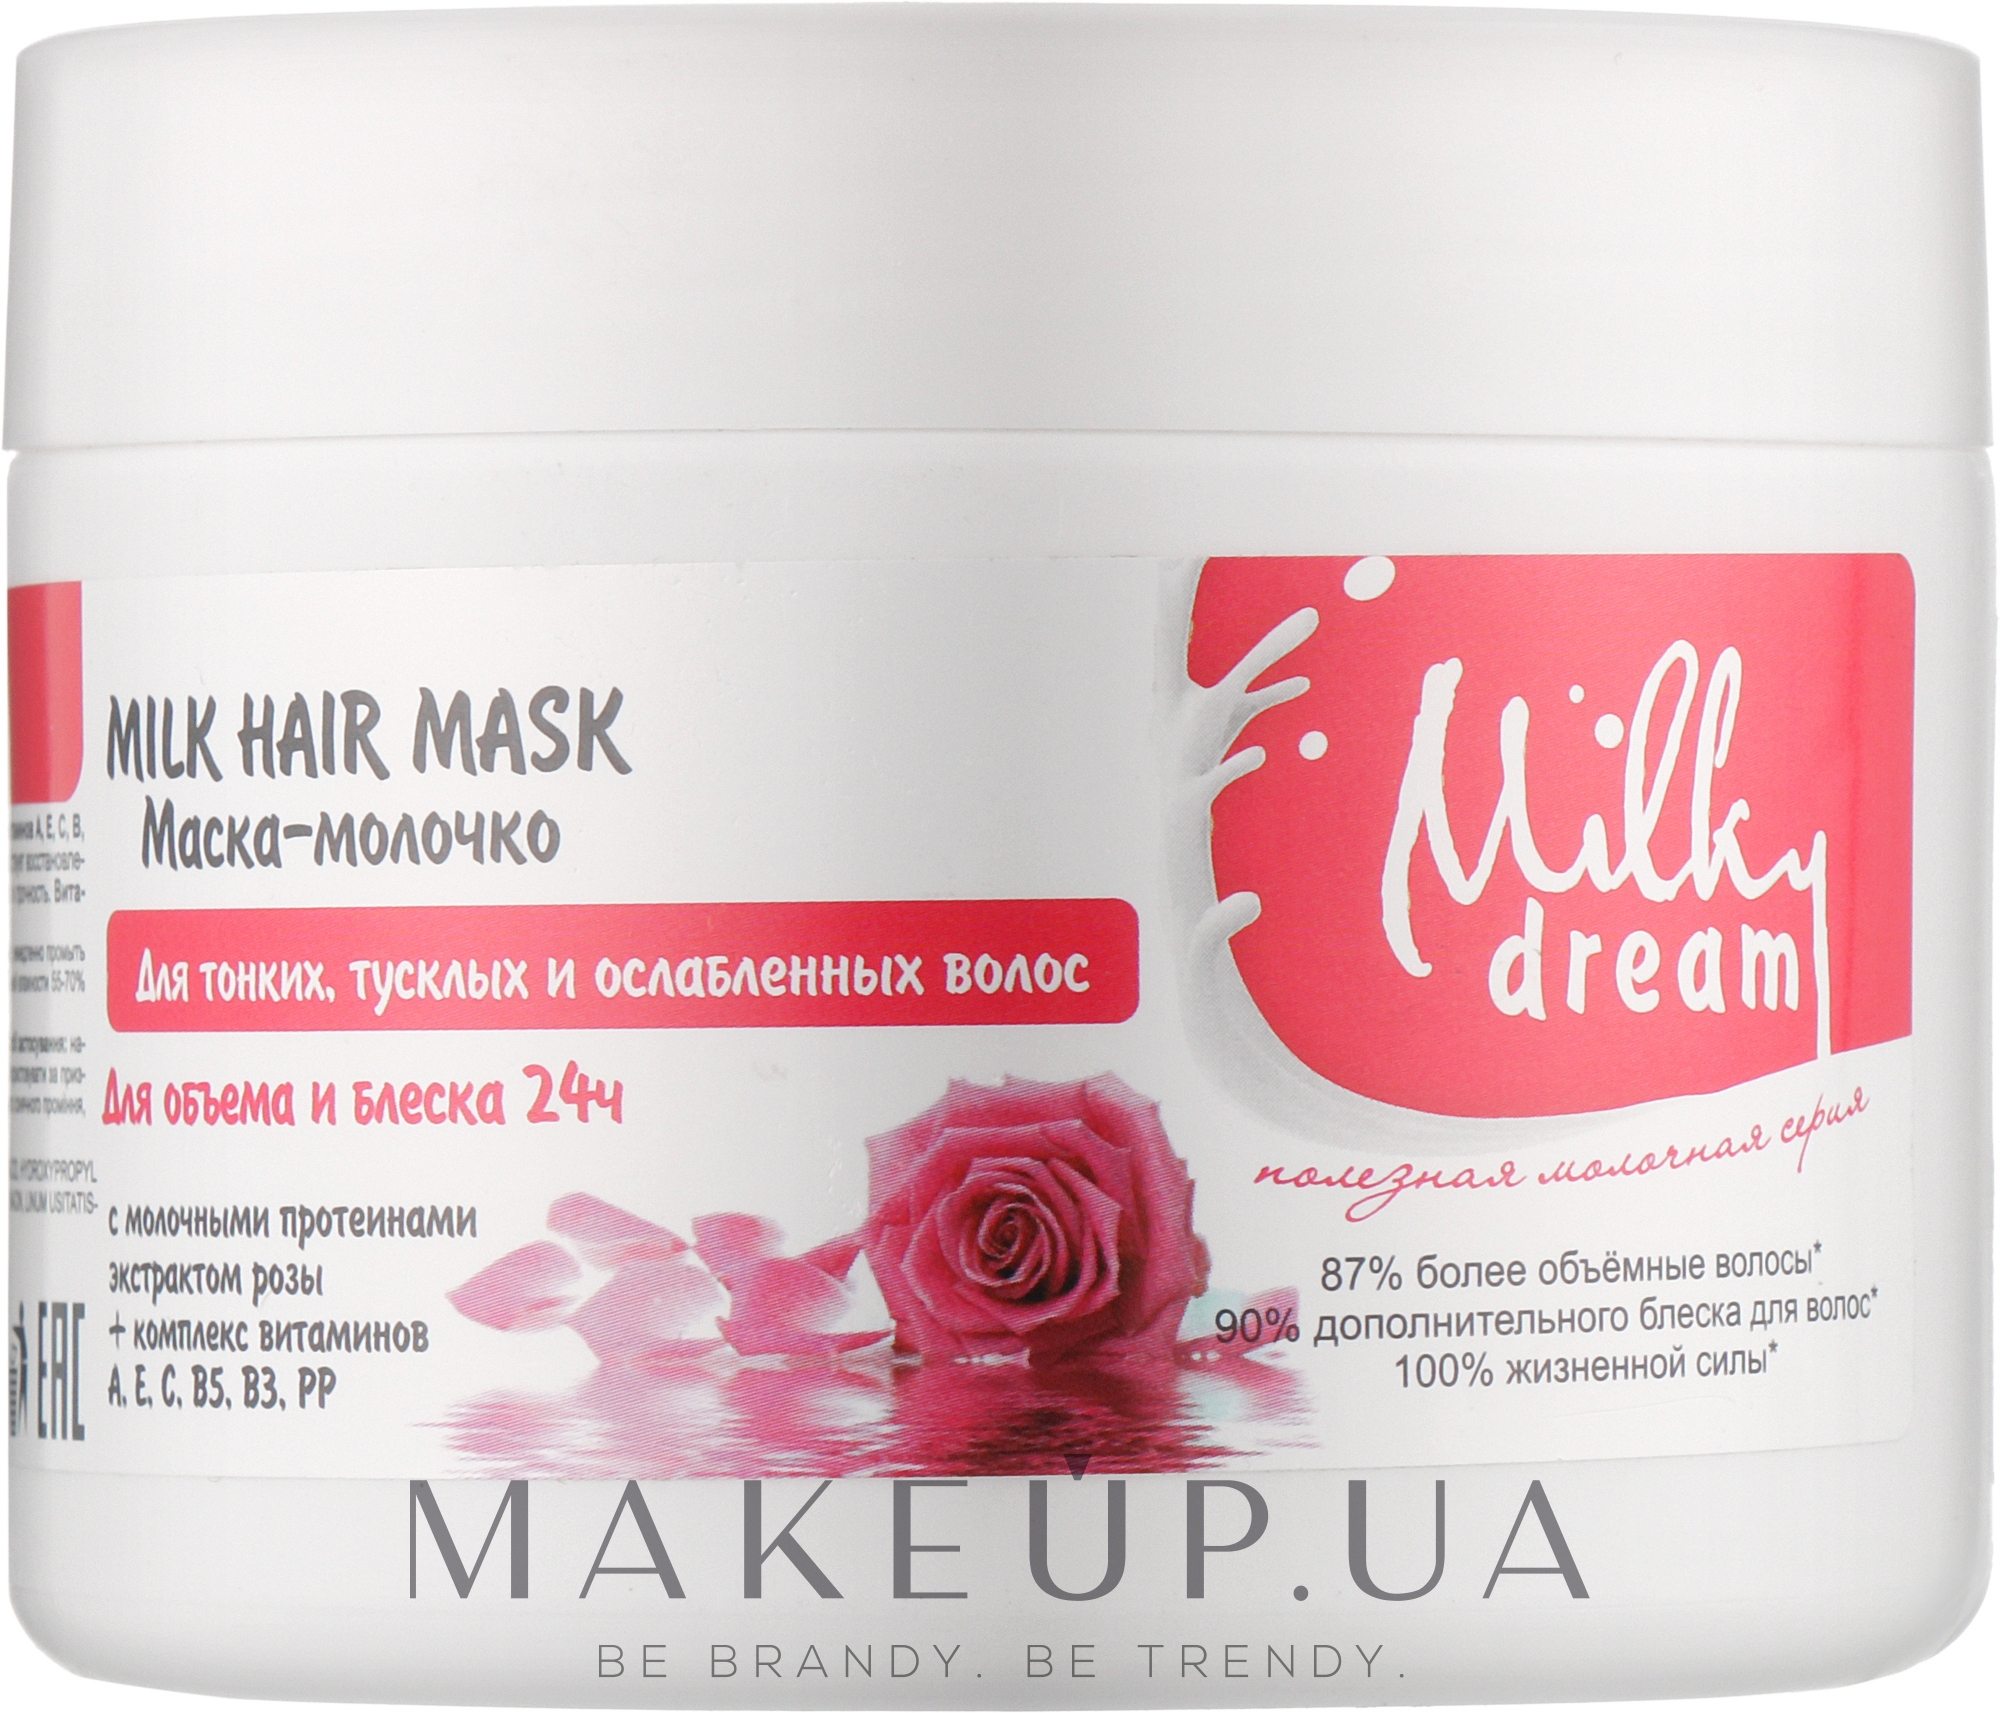 Маска-молочко для волос "Для объема и блеска 24 часа" - Milky Dream Milk Hair Mask — фото 300ml